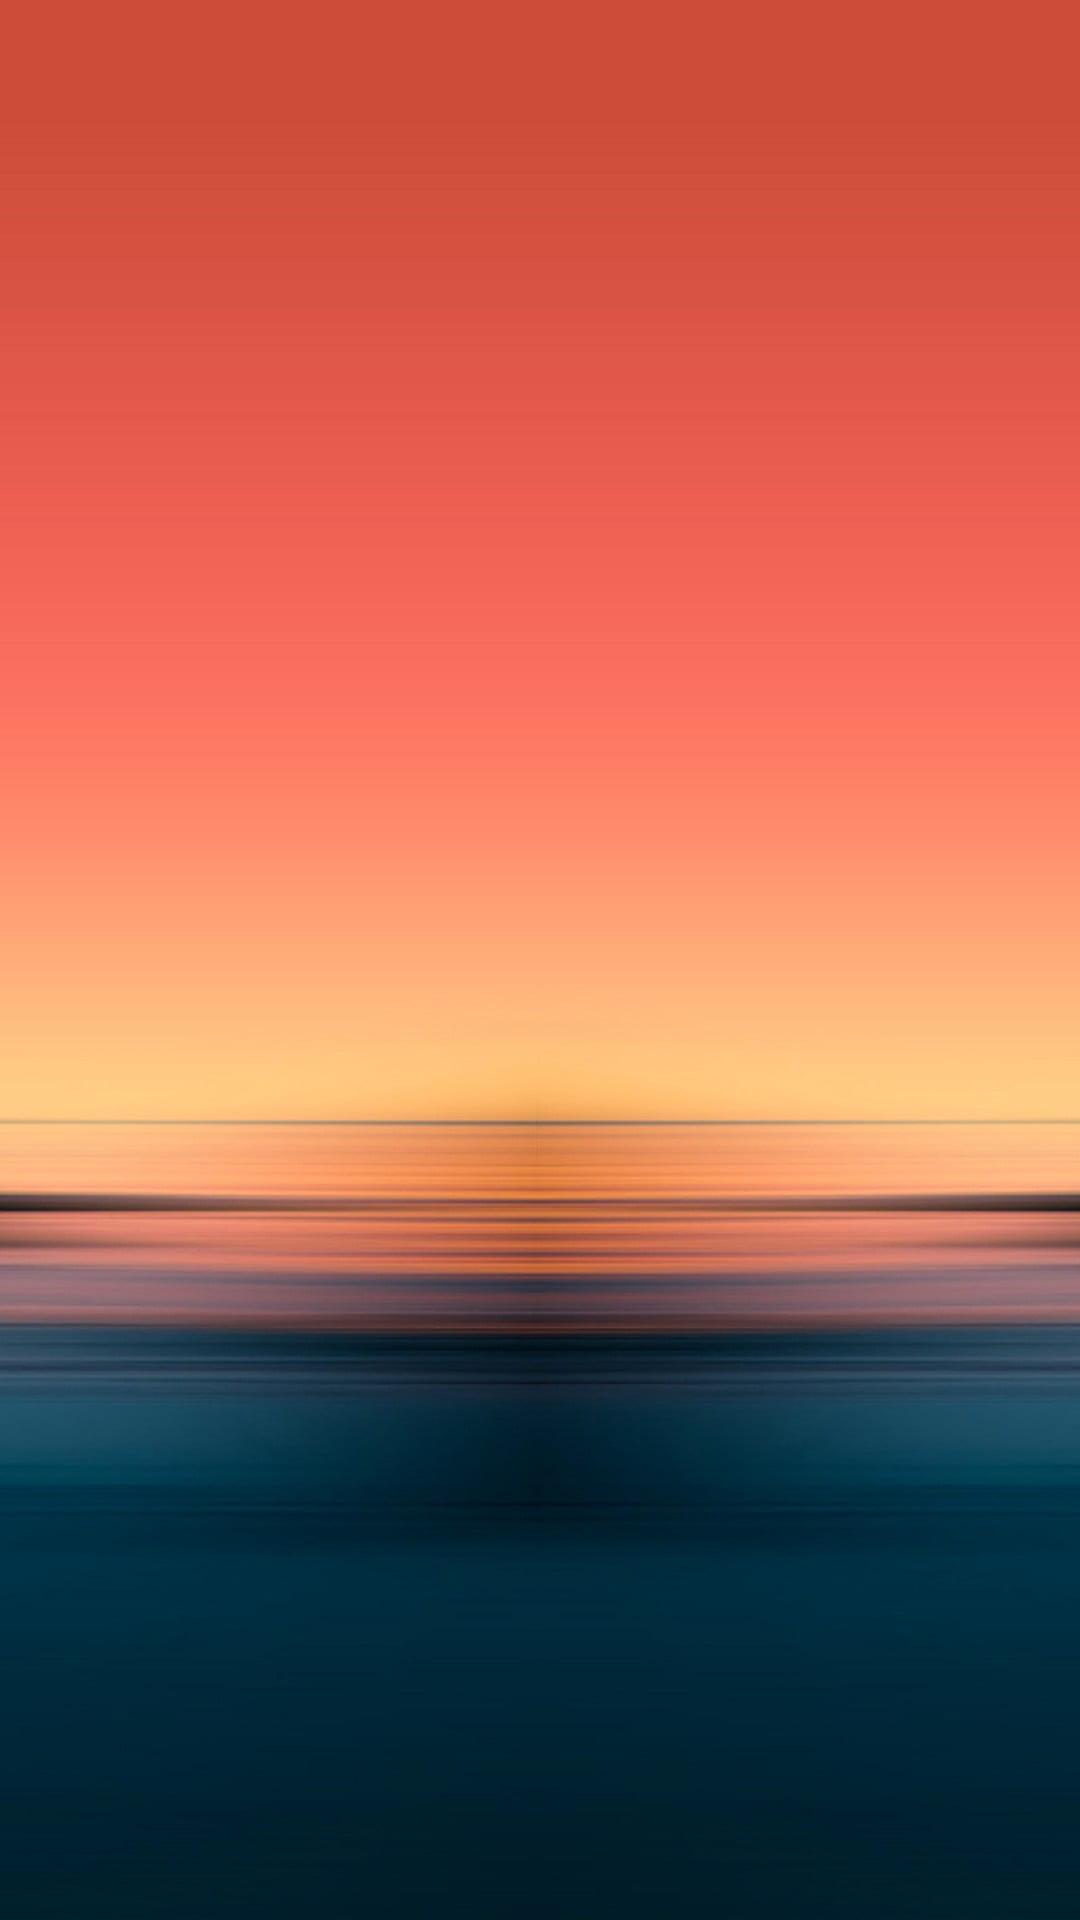 HD wallpaper: body of water and sunset digital wallpaper, gradient